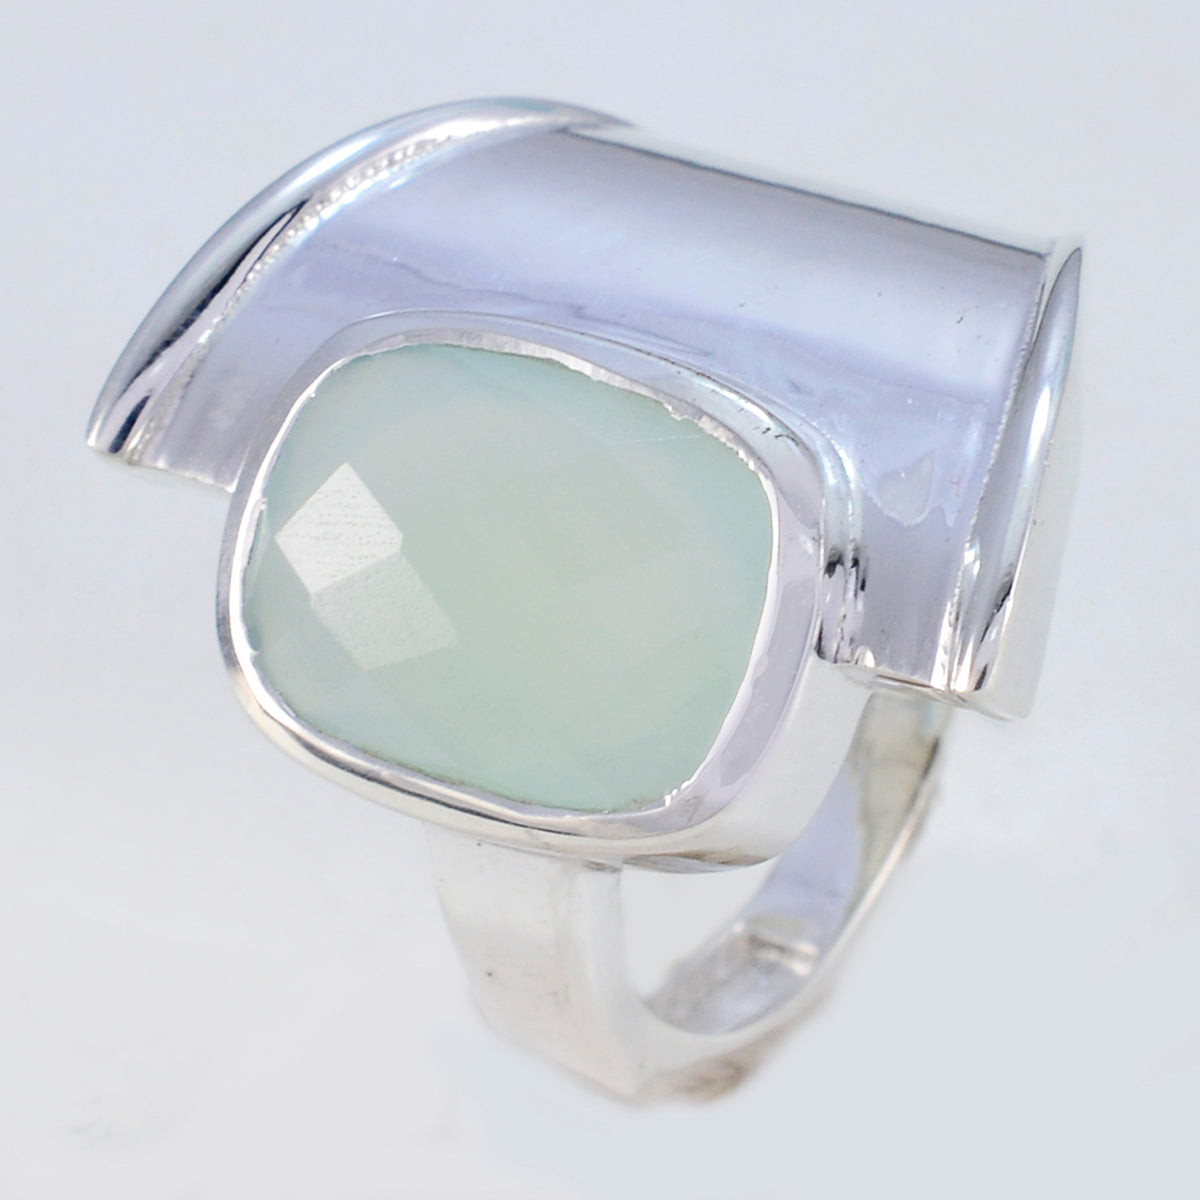 Riyo Flawless Gemstones Aqua Chalcedony 925 Silver Ring Great Item